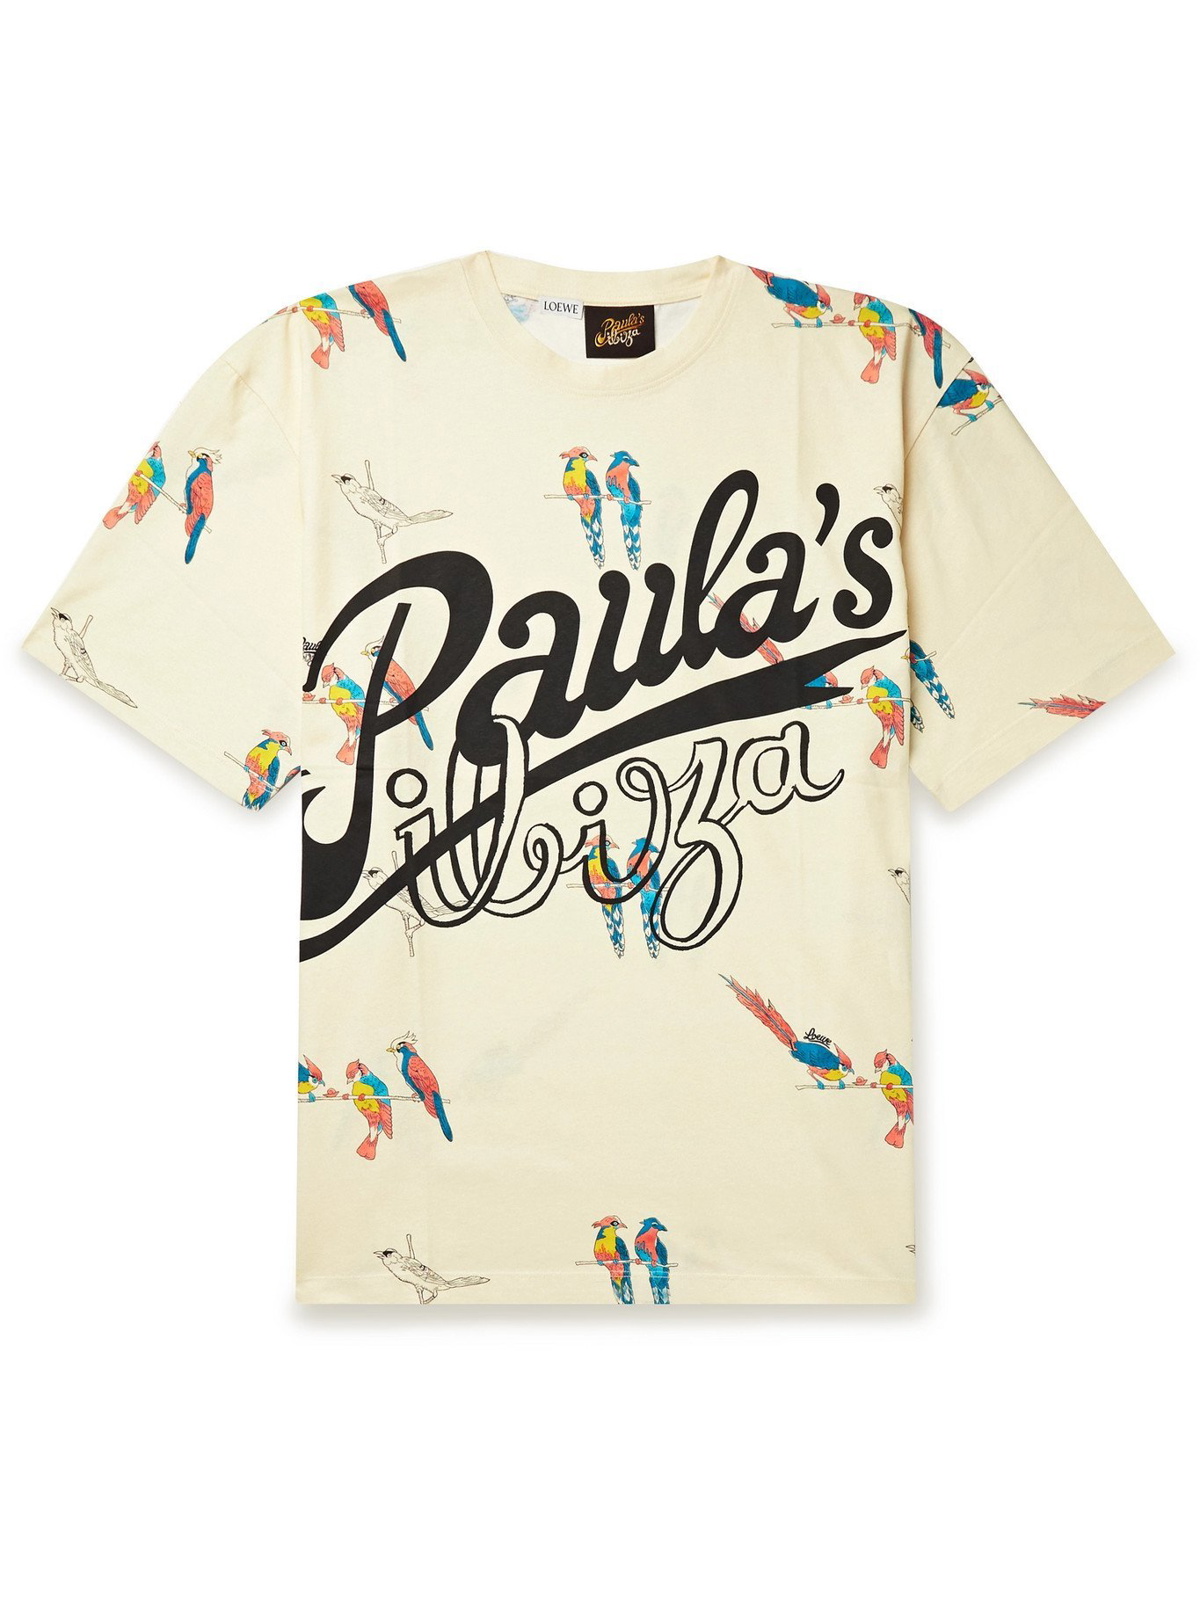 LOEWE Paula's Ibiza Parrot T-shirt サイズS | nate-hospital.com